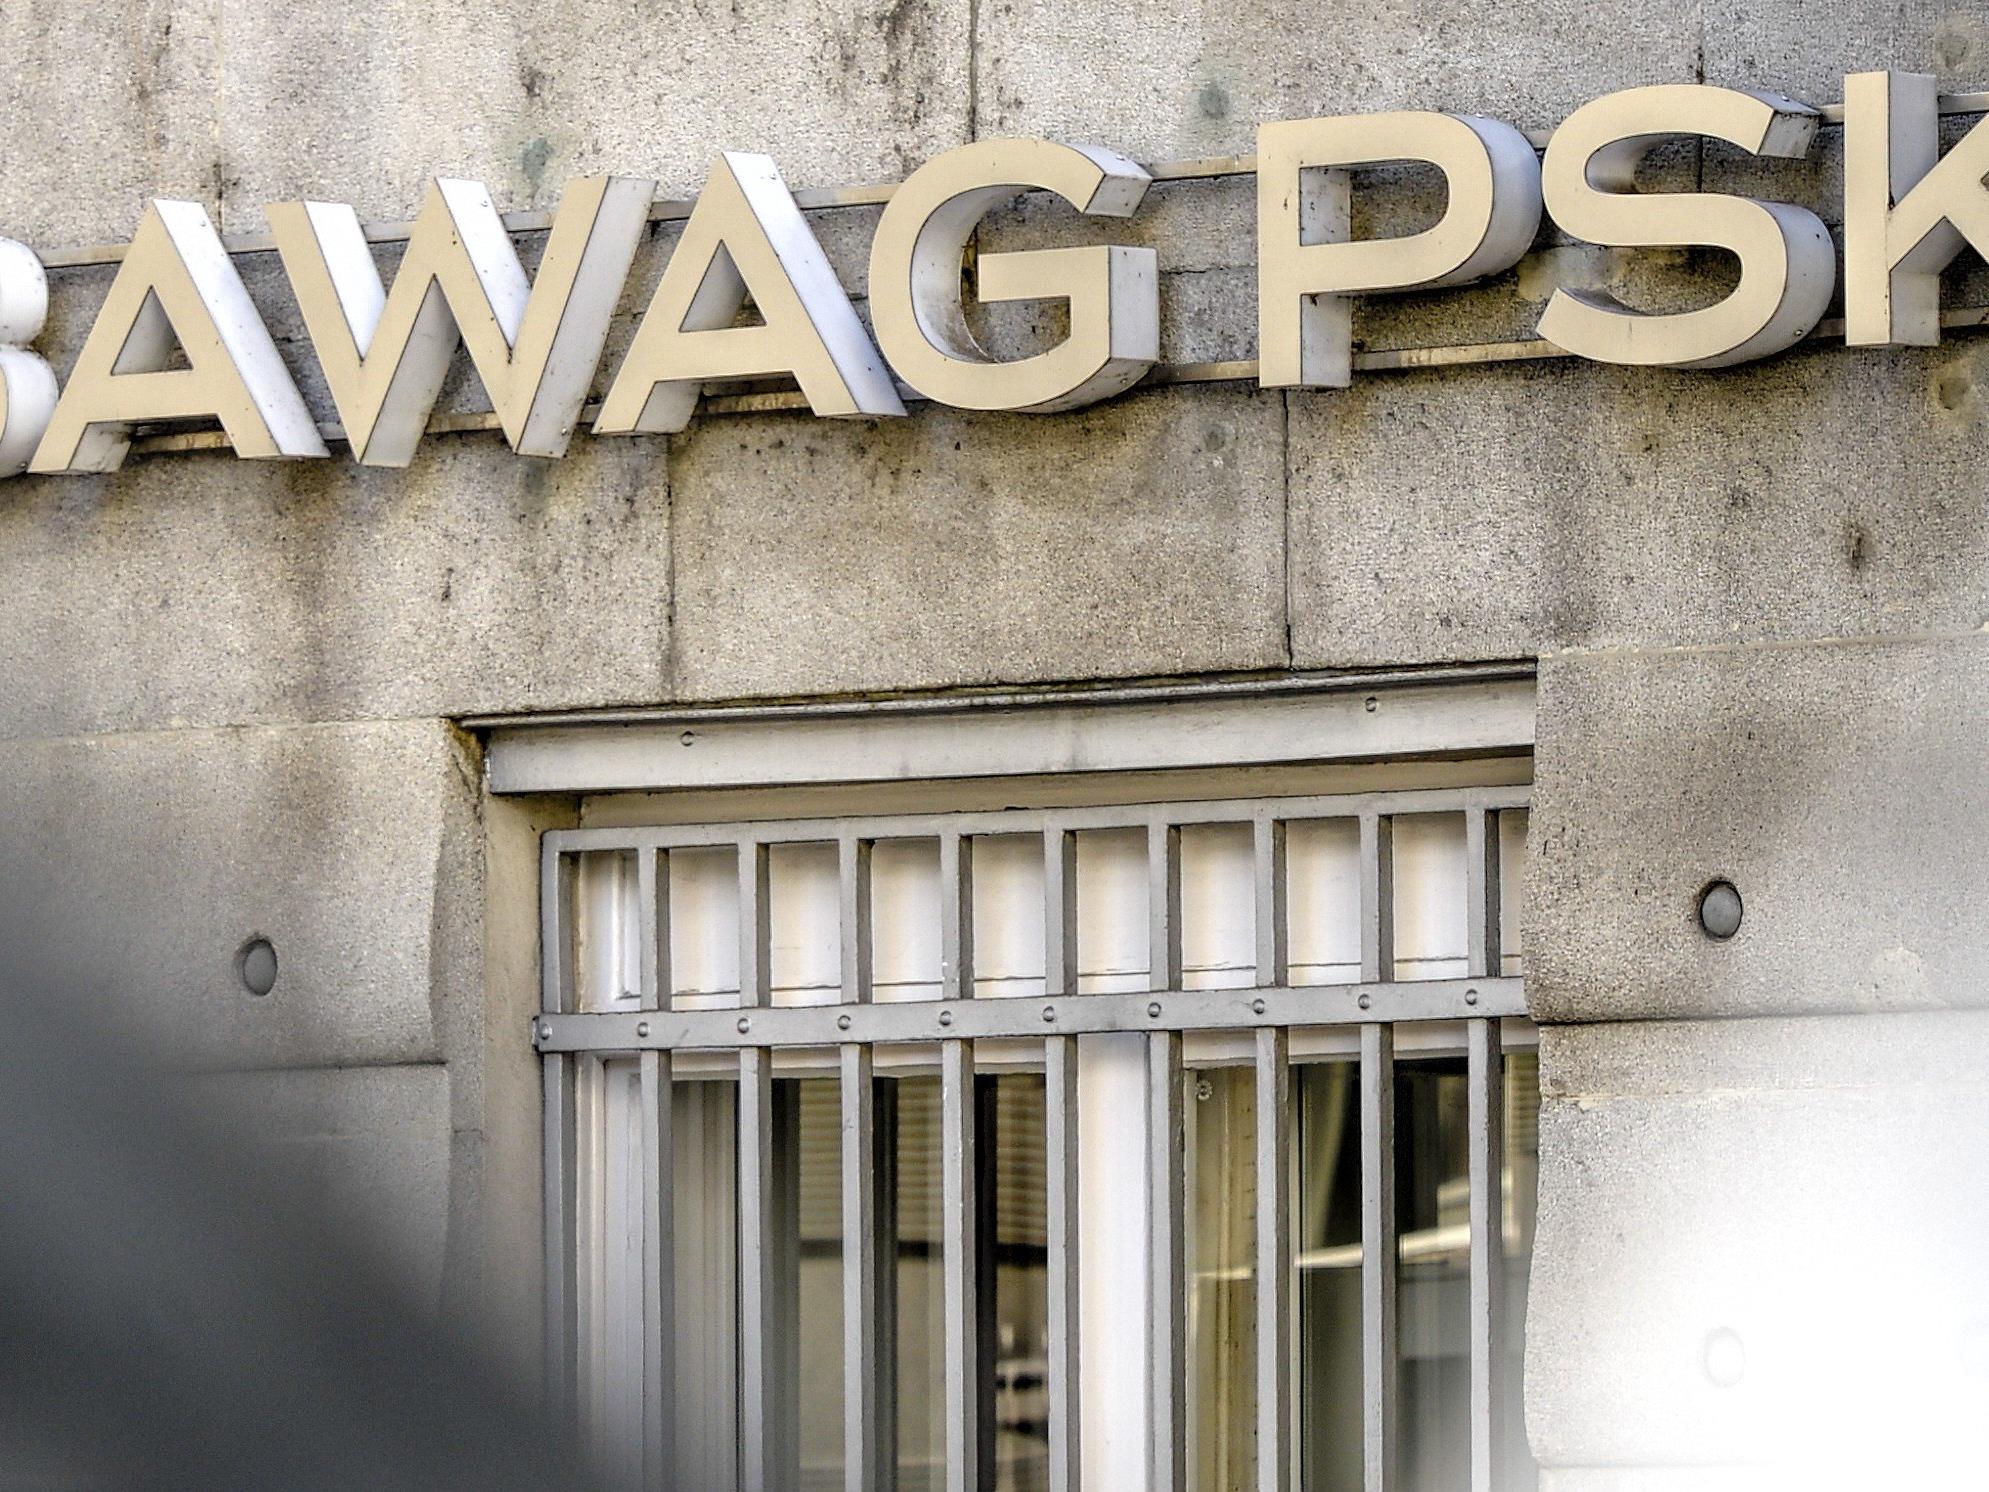 Ab Februar startet das Pilotprojekt zu "Islamic Banking" bei der BAWAG PSK in Wien.